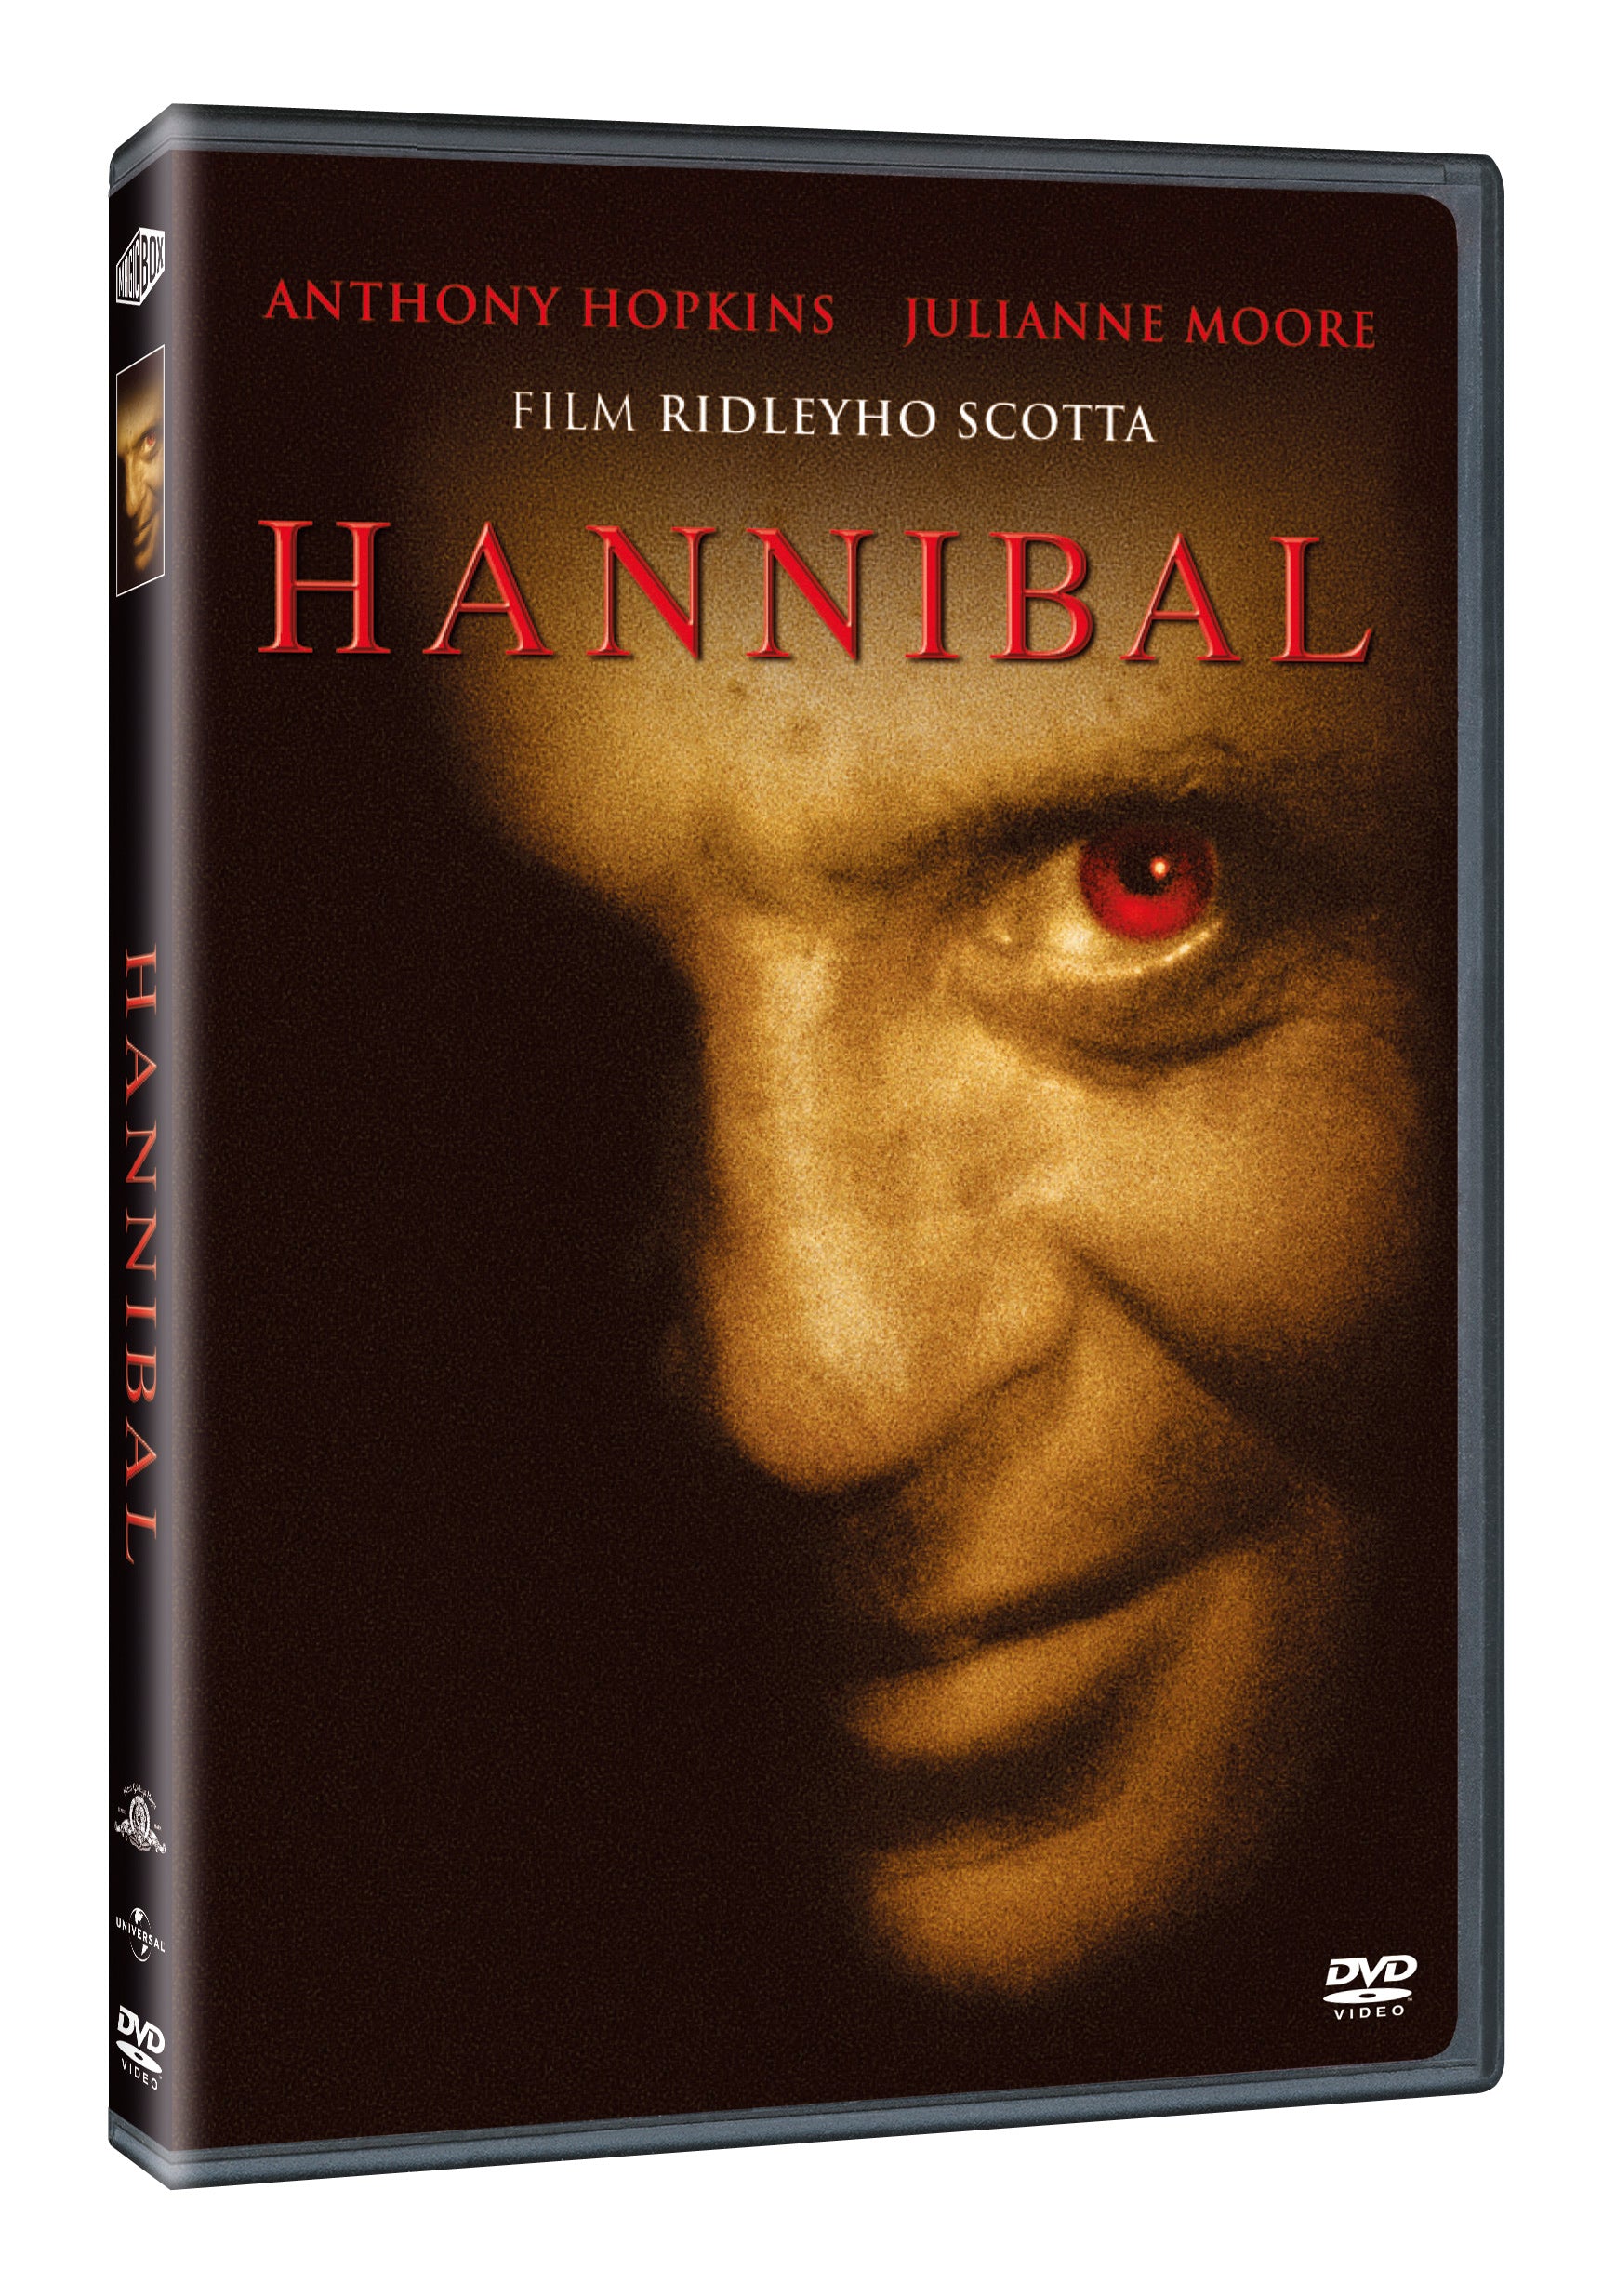 Hannibal DVD / Hannibal